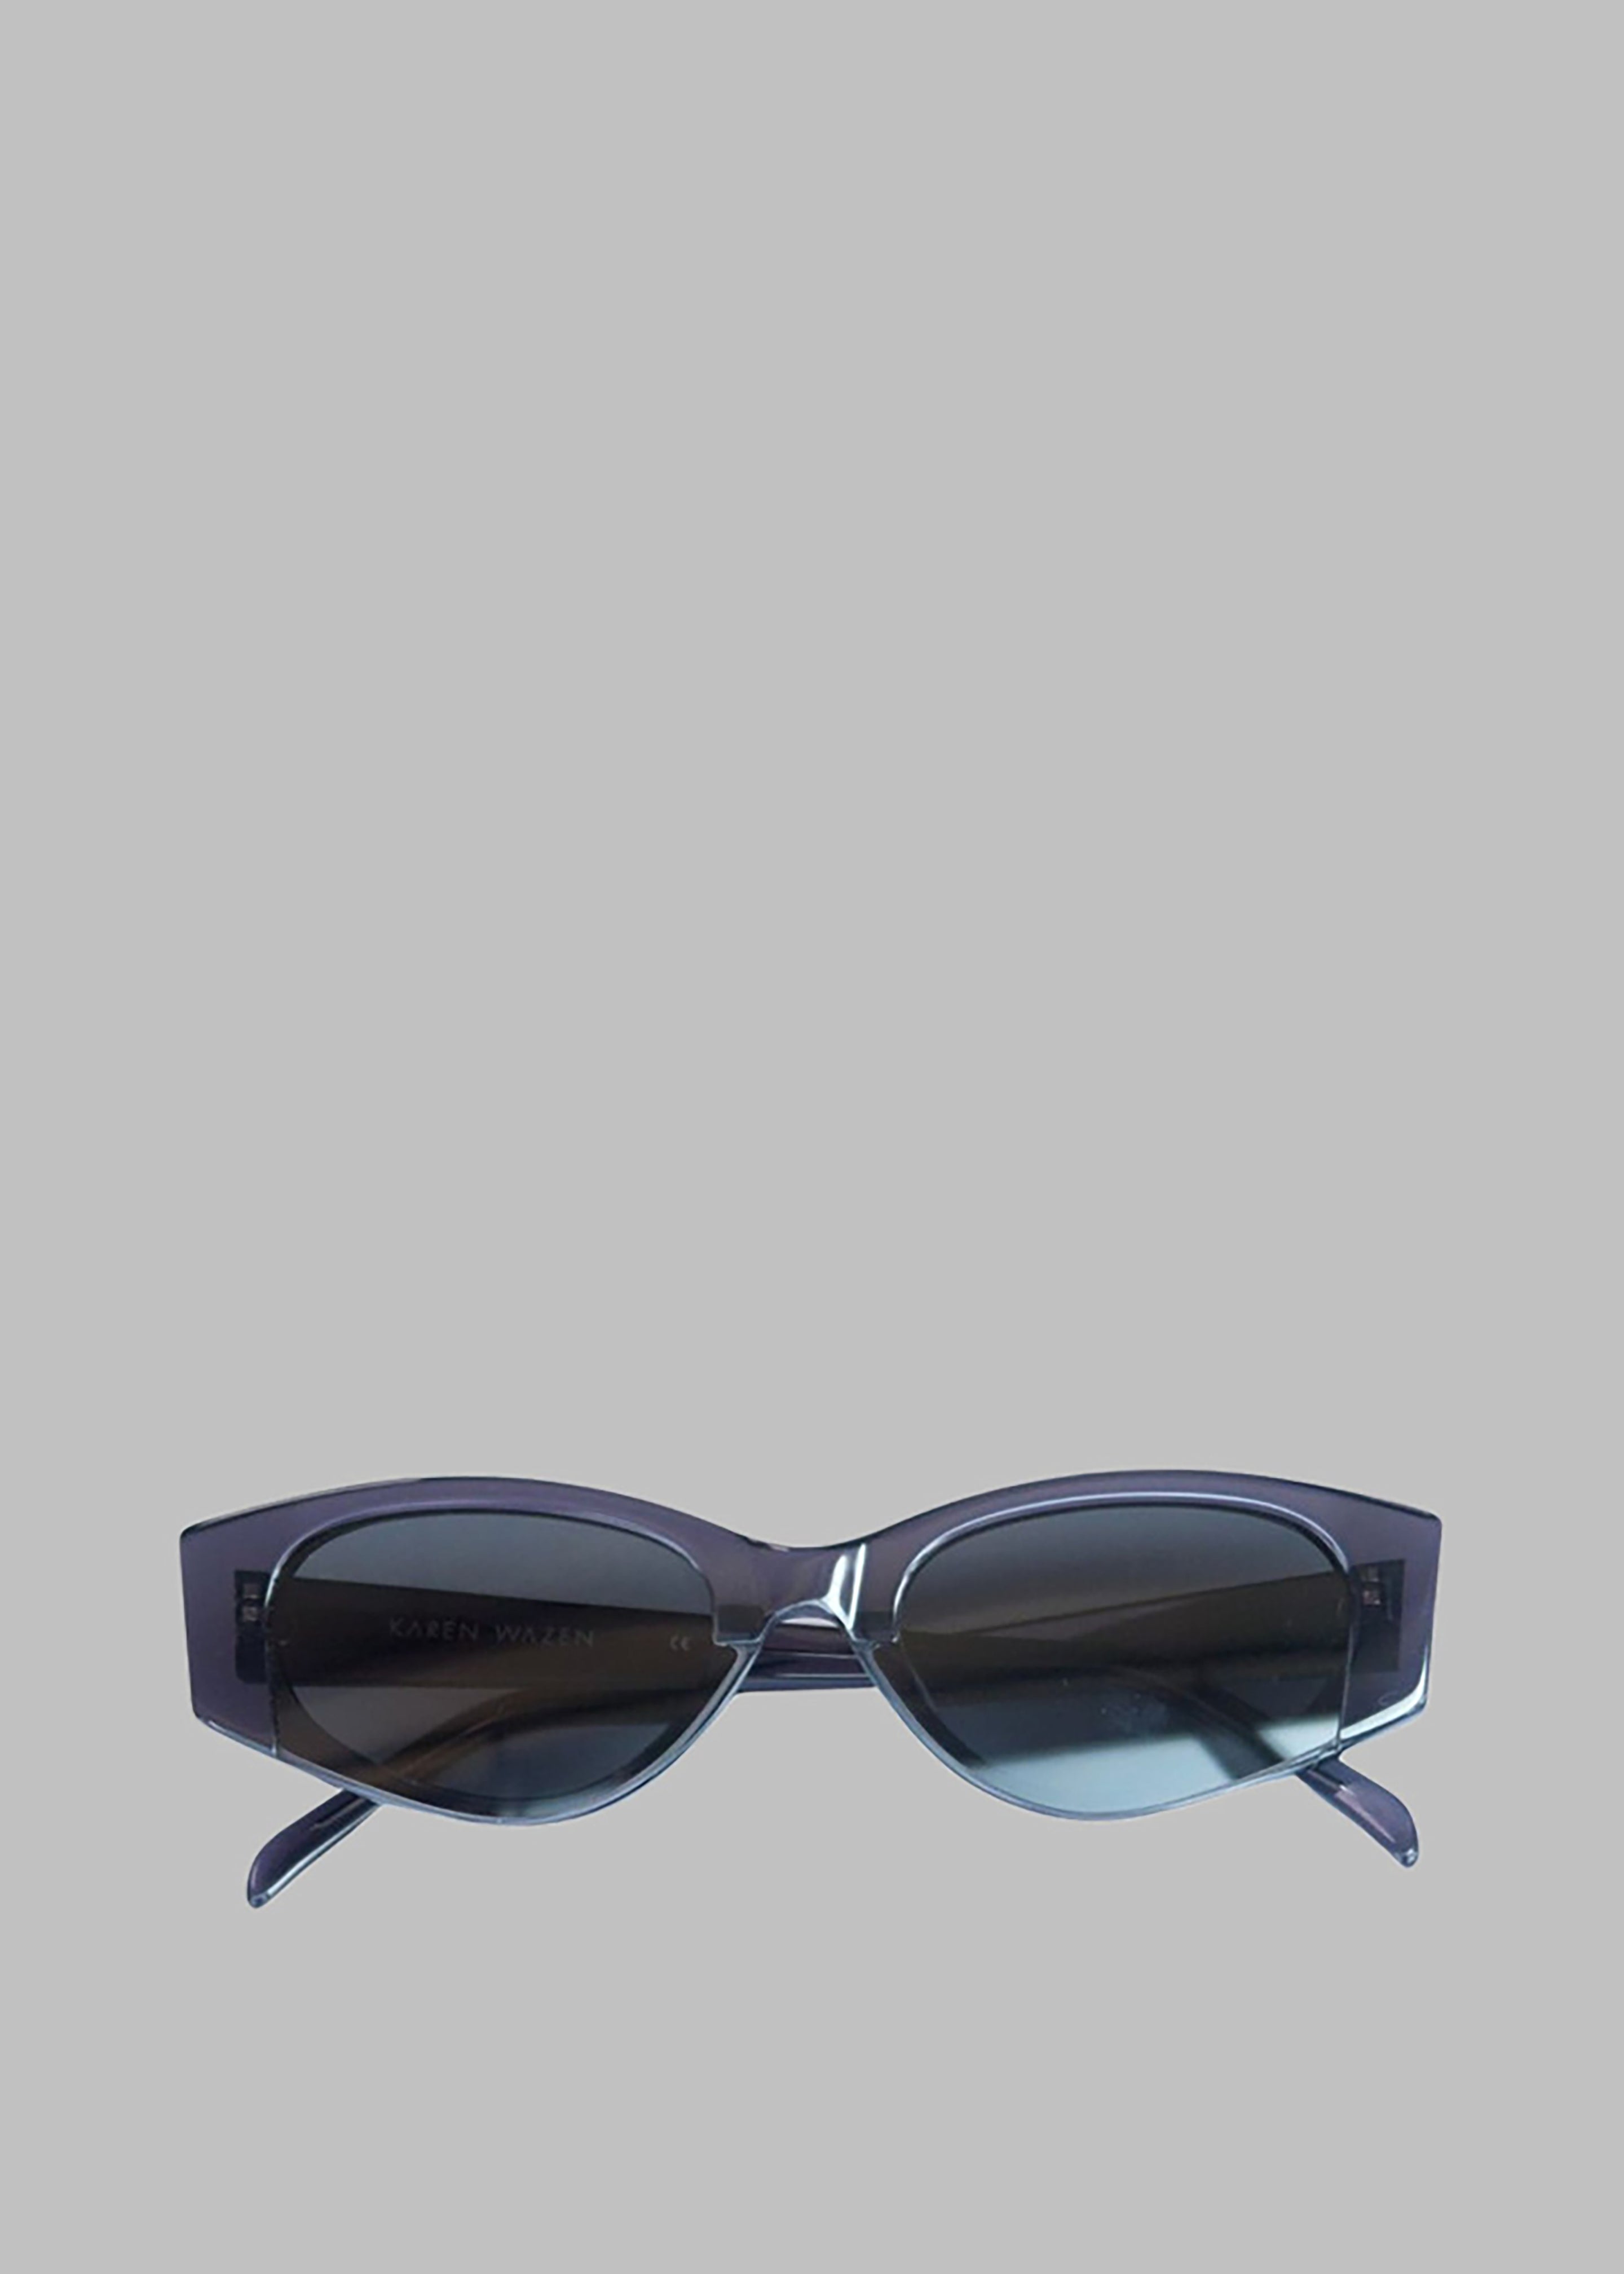 Karen Wazen Dixy Sunglasses - Smoky Grey - 3